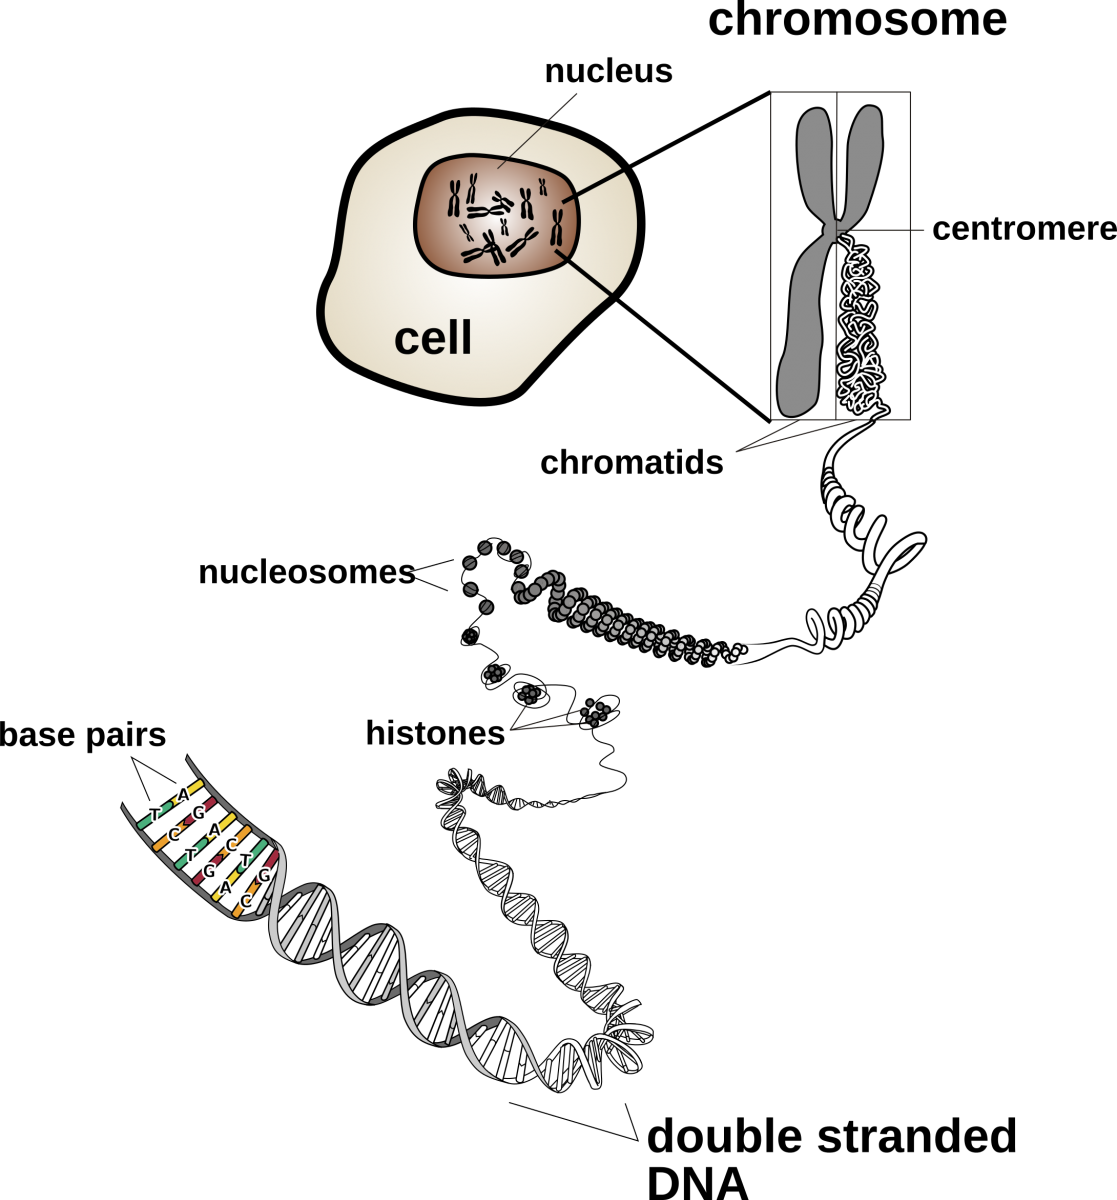 chromosome structure presentation